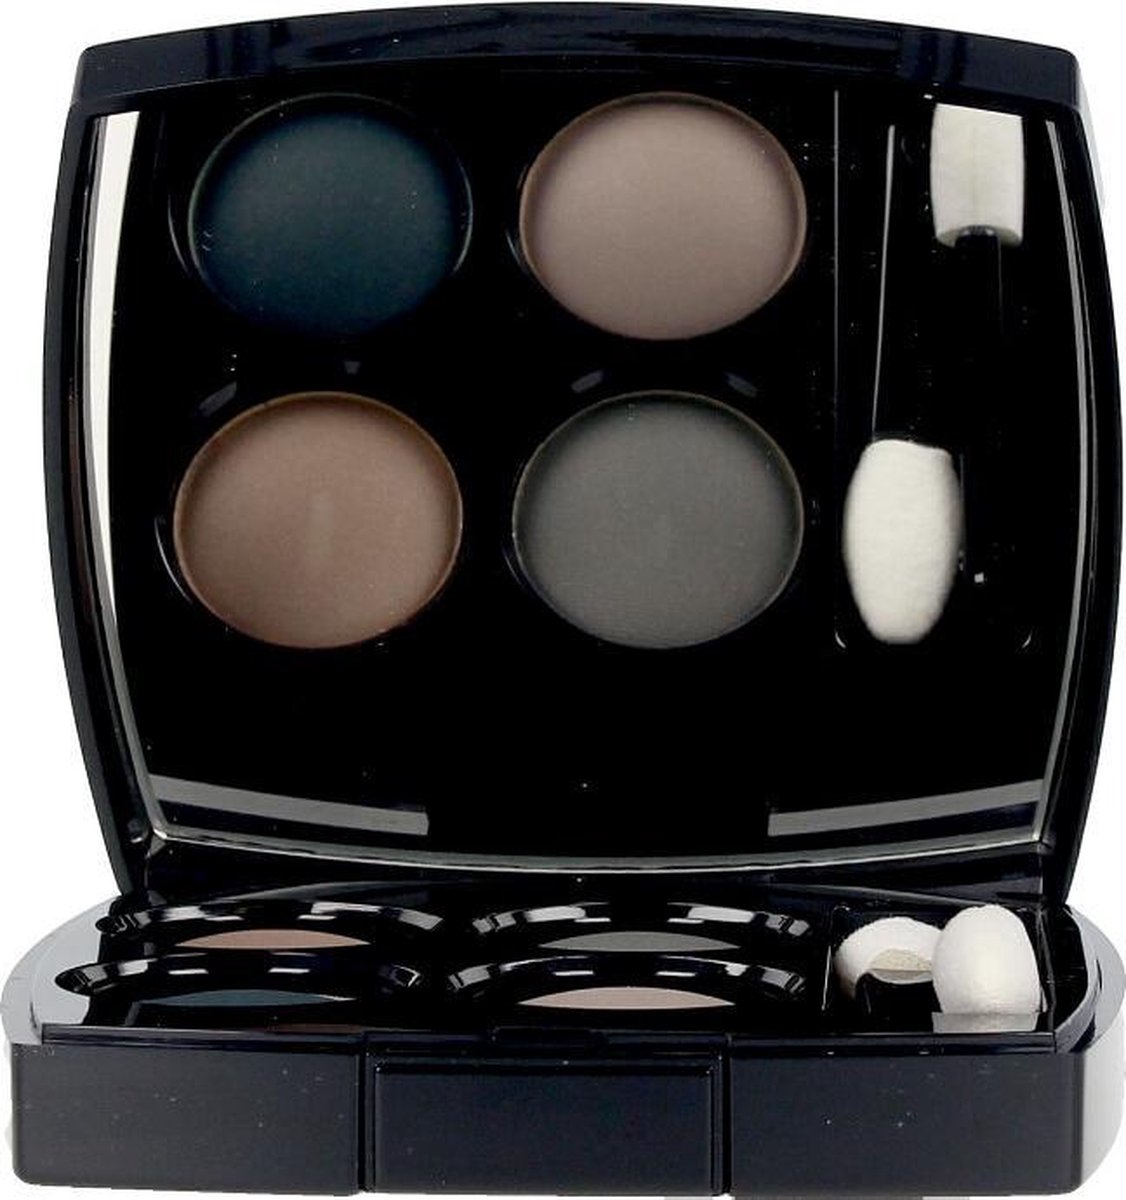 Chanel LES 4 Ombres Blurry Blue 2g, 美容＆個人護理, 健康及美容- 皮膚護理, 化妝品- Carousell